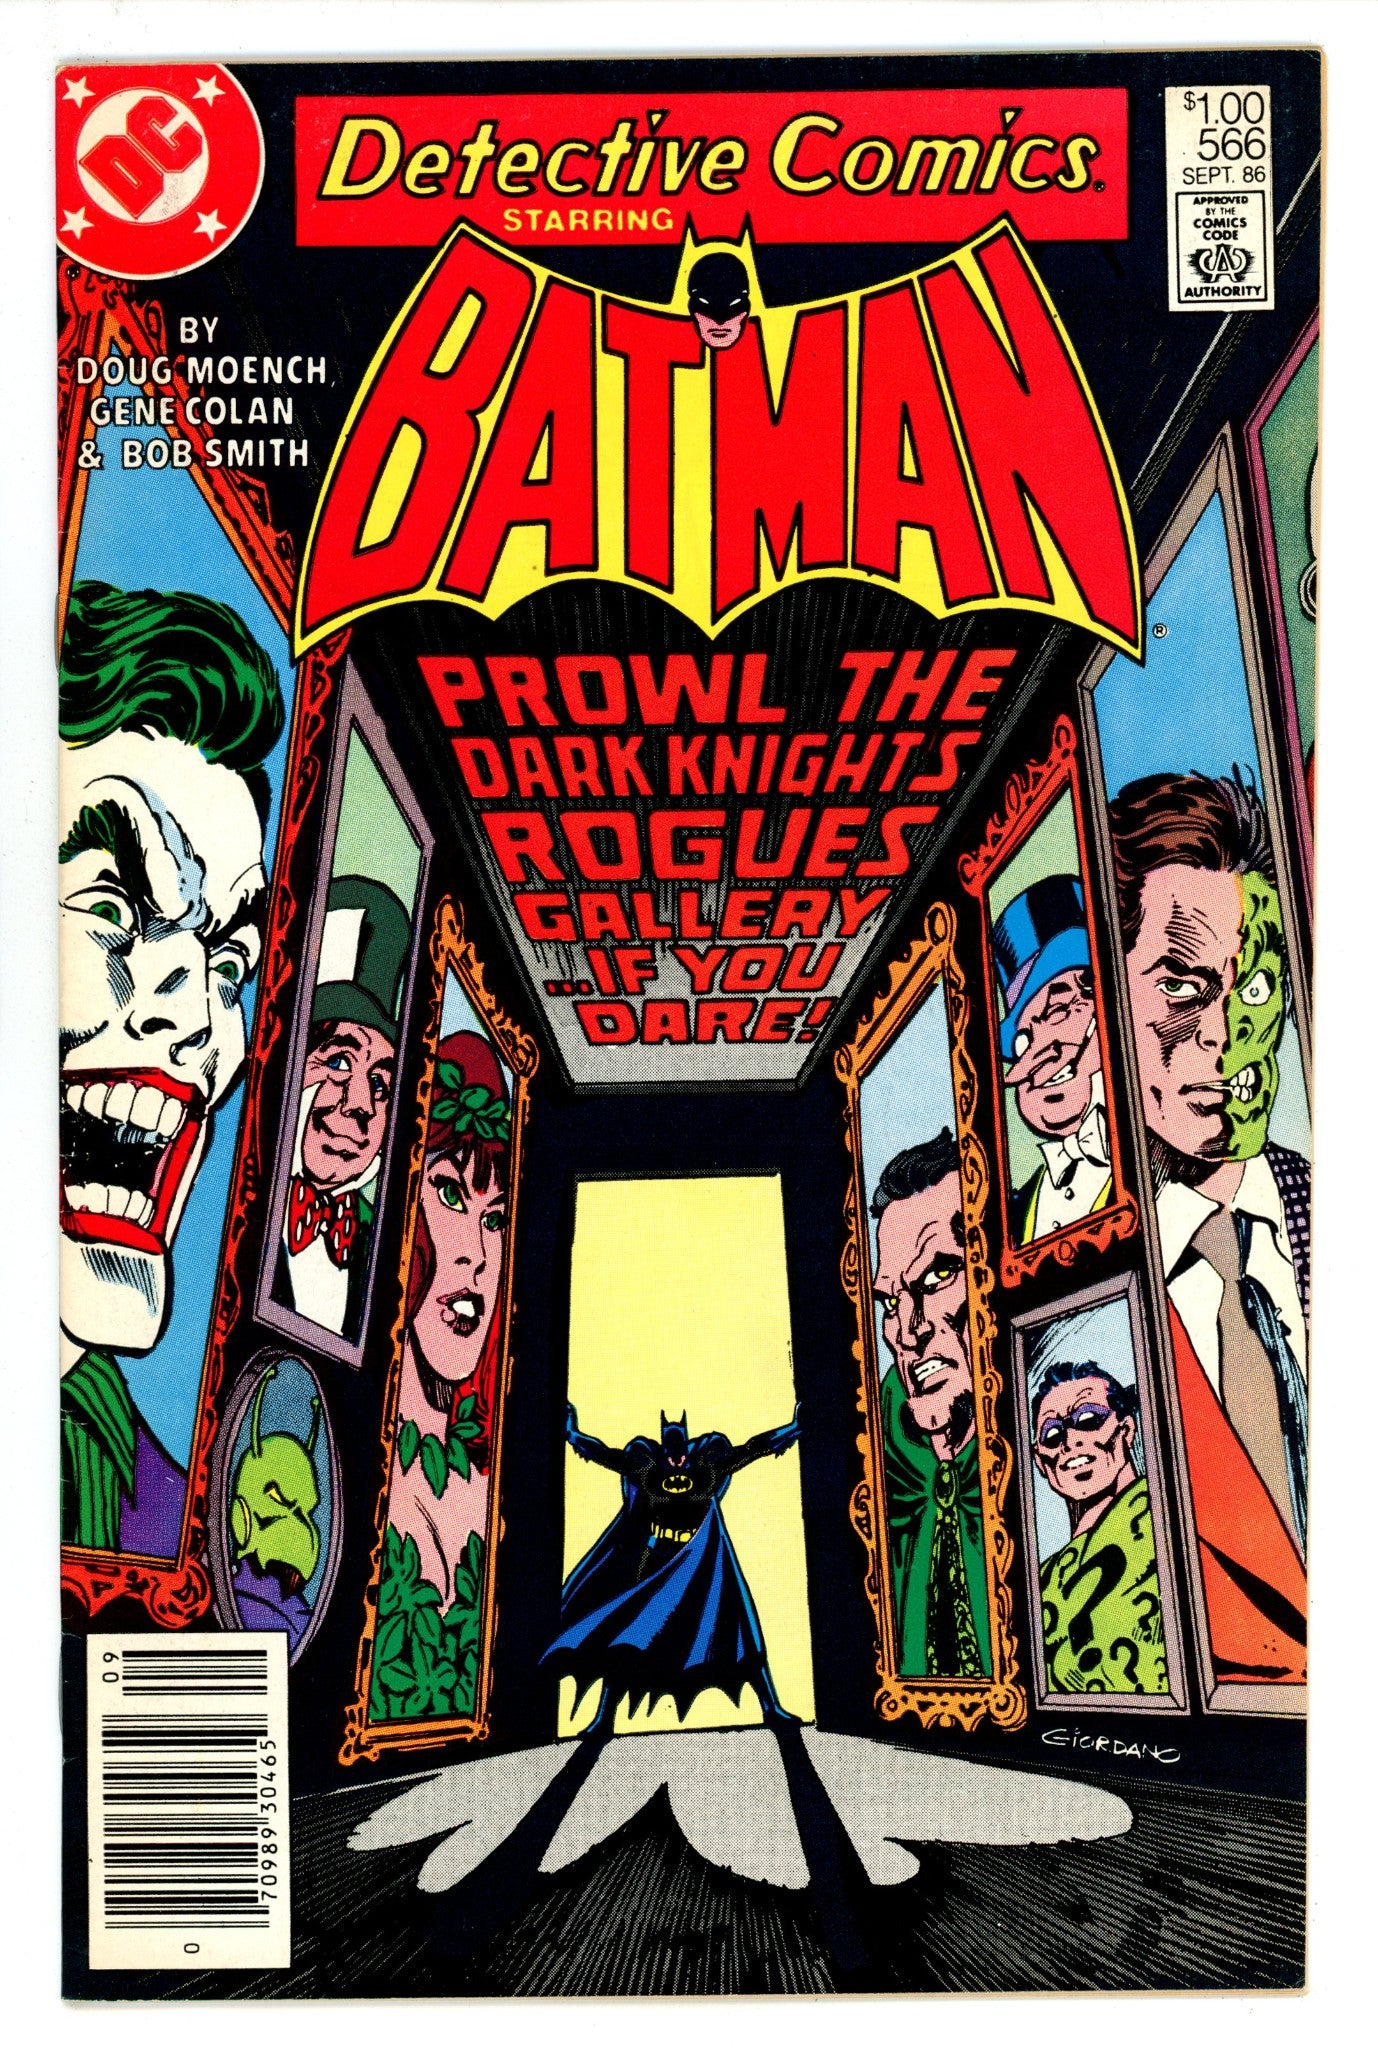 Detective Comics Vol 1 566 VF (8.0) (1986) Canadian Price Variant 